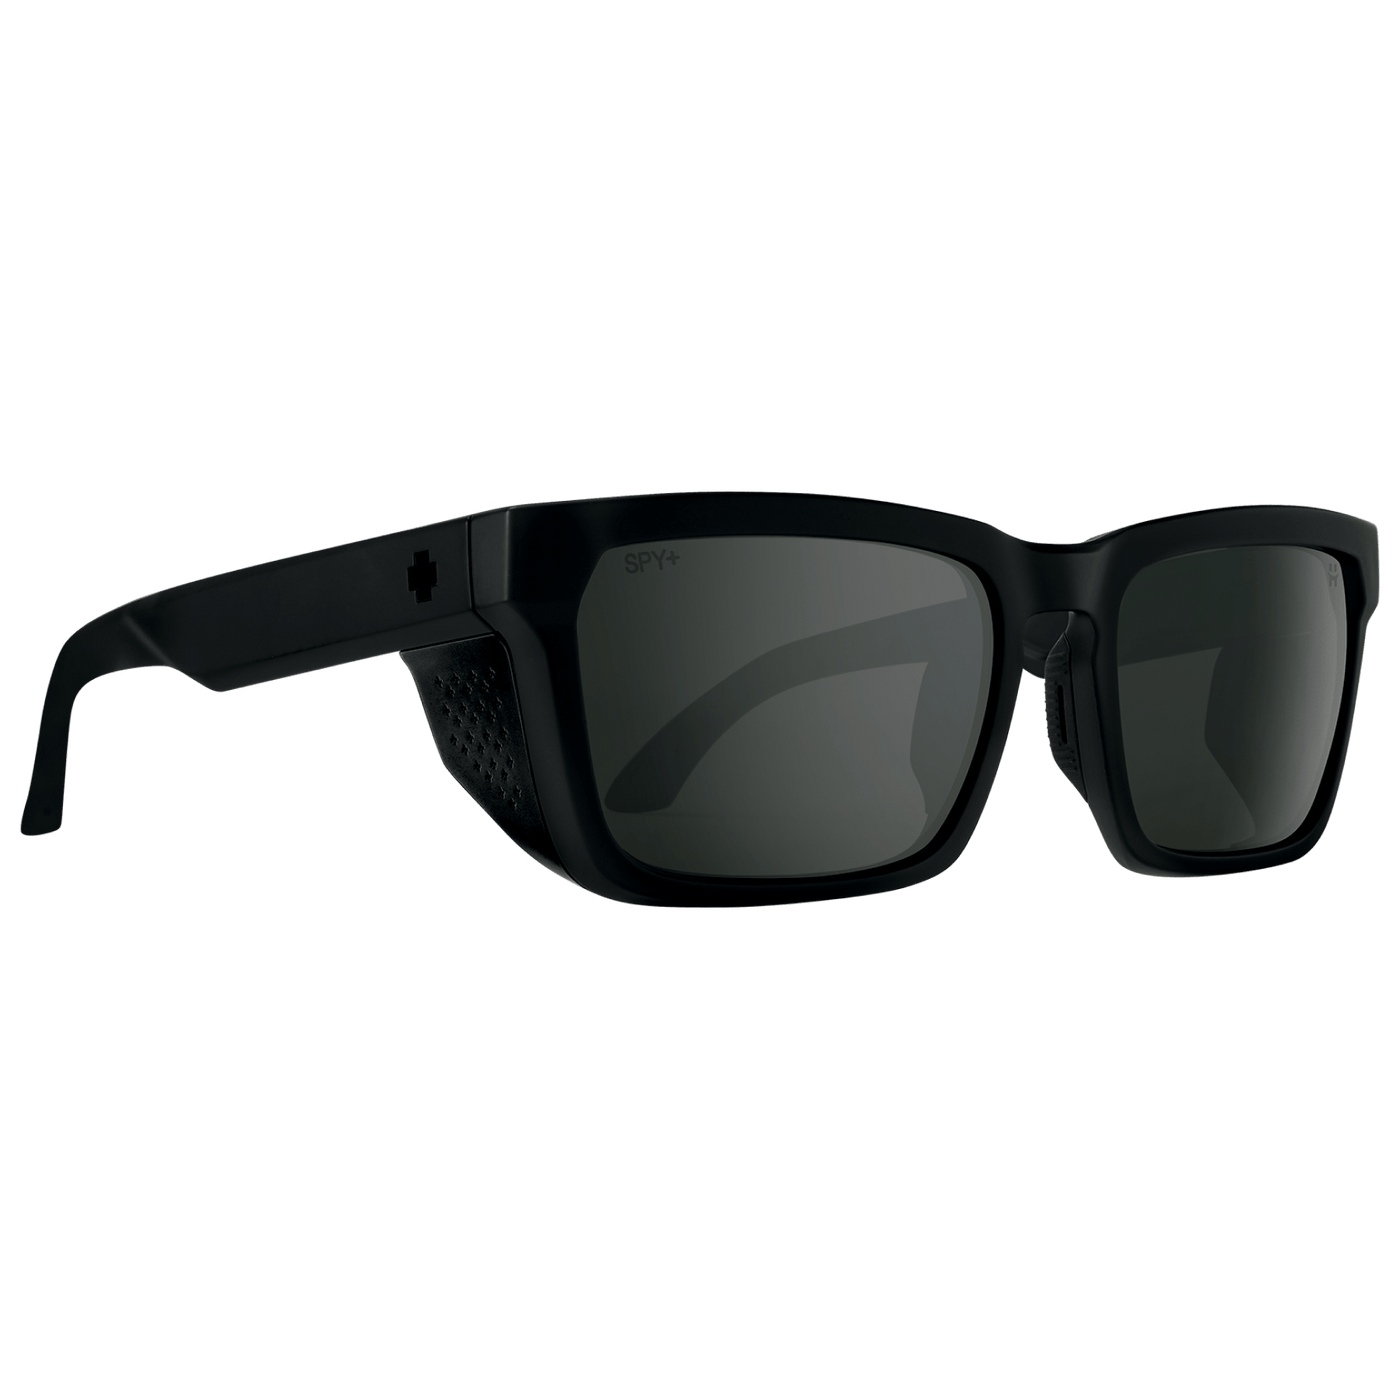 SPY HELM TECH Sunglasses, Happy Lens - Black 8Lines Shop - Fast Shipping